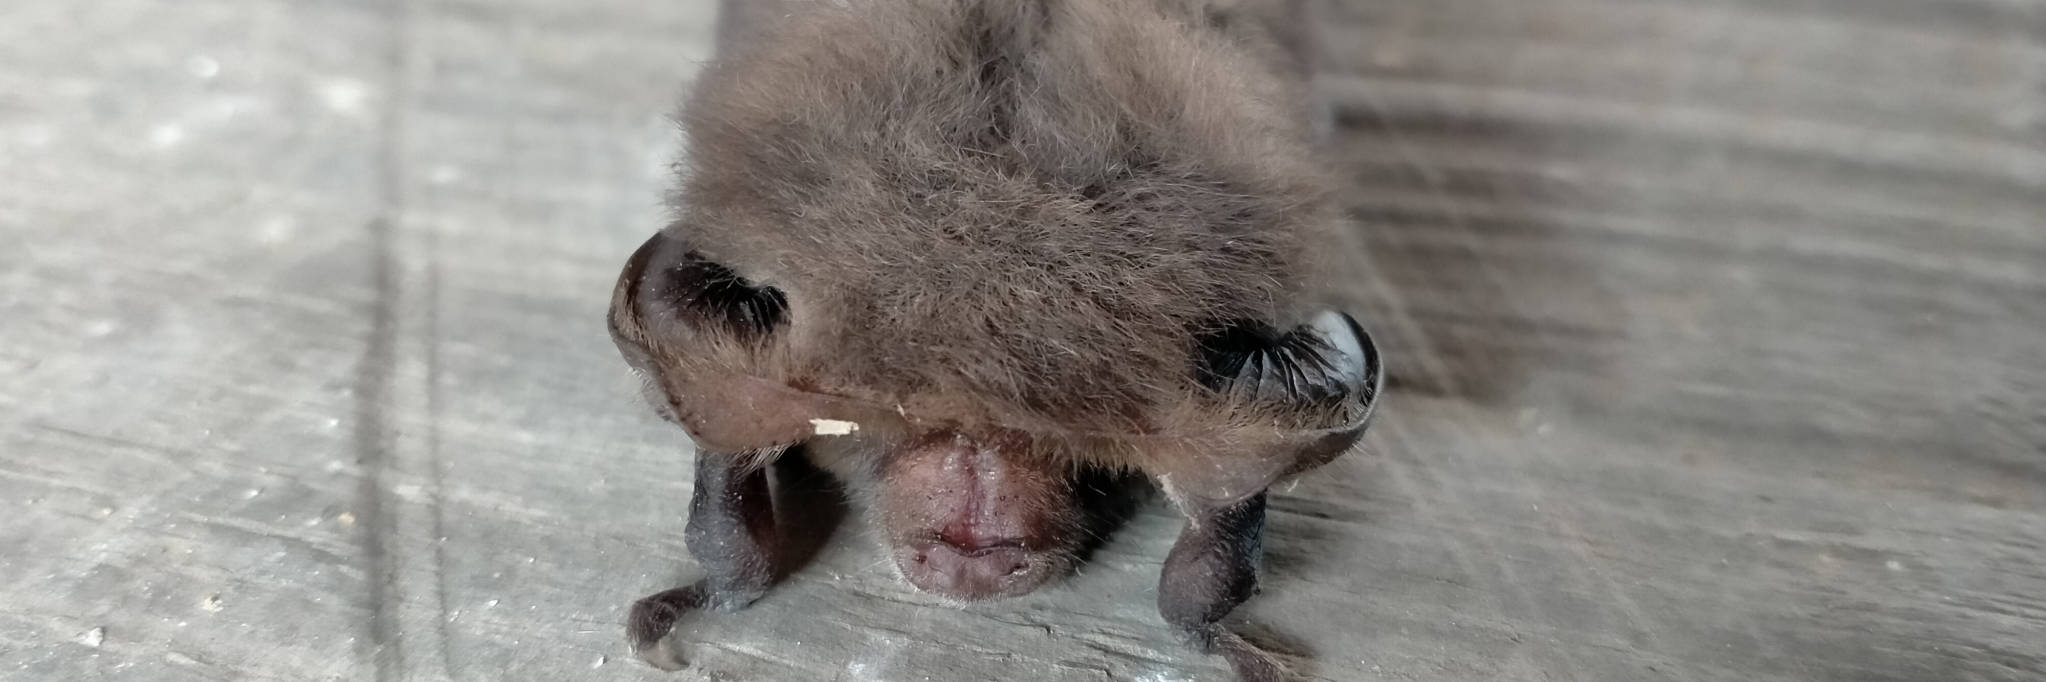 Lesser long-eared bat. Photo: Tristan Derham.